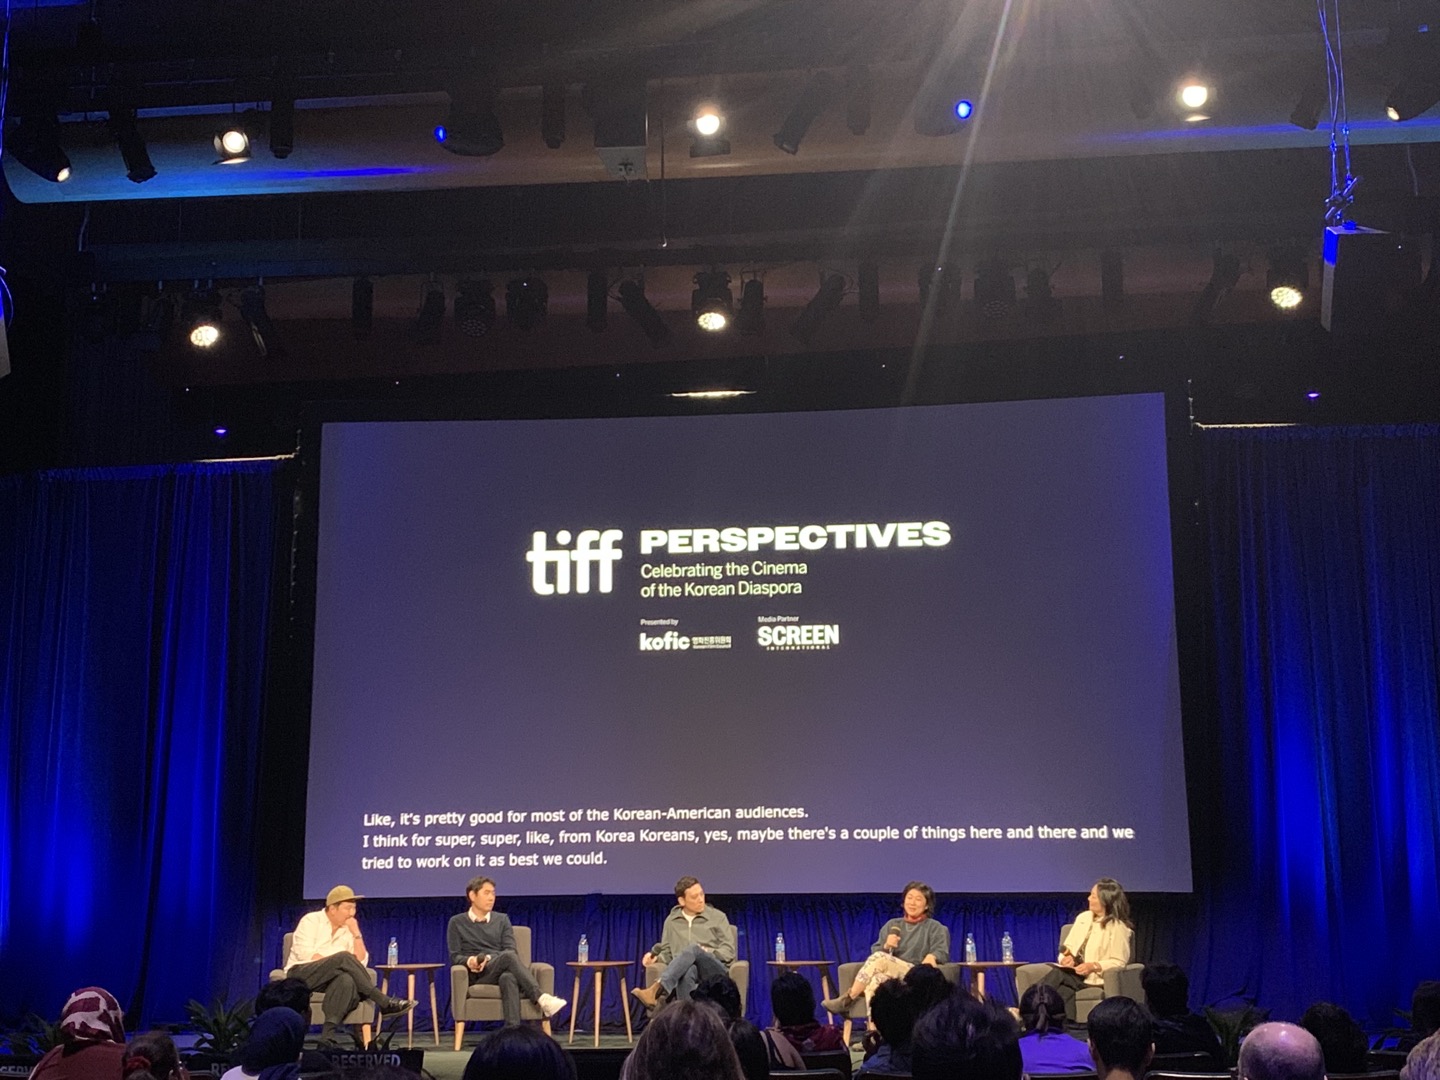 < TIFF가 마련한 특별 콘퍼런스에서 한인 영화감독들이 대담을 나누고 있다 - 출처: 통신원 촬영 >